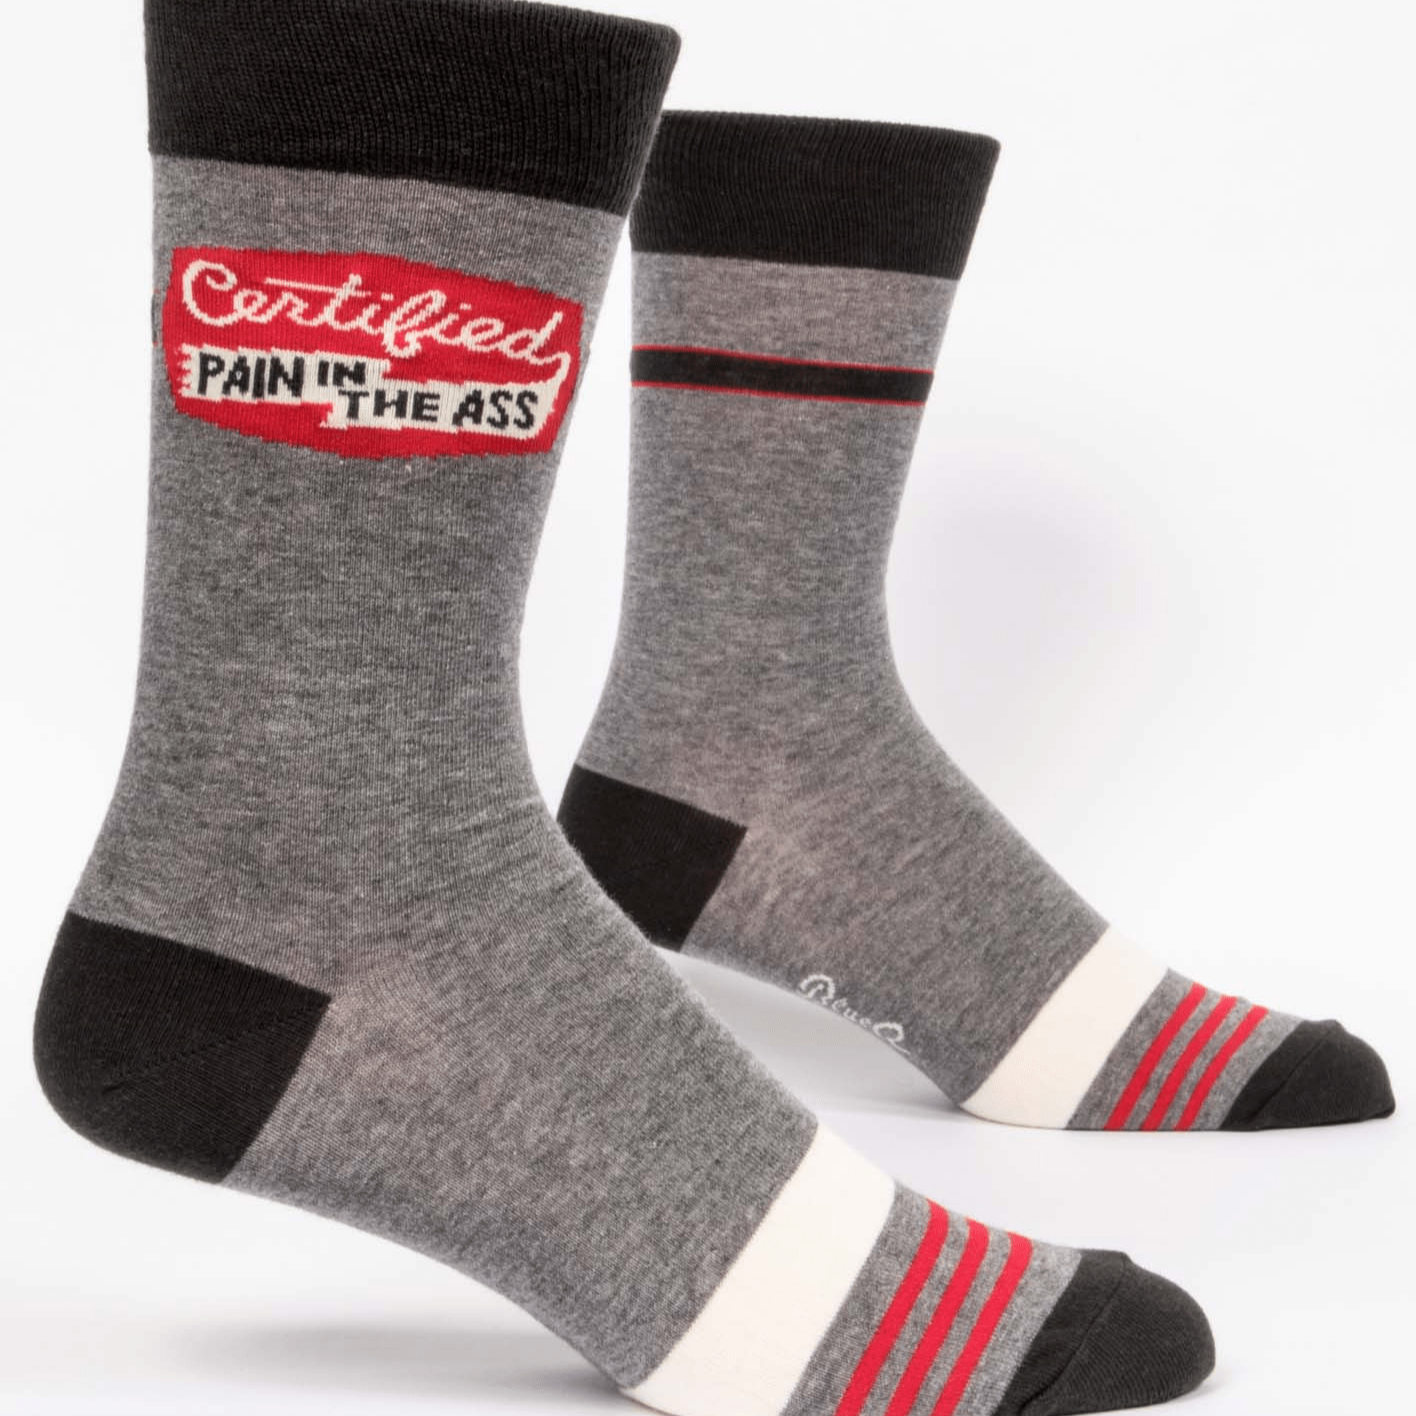 Certified Pain in the Ass Sock Men’s Crew Socks gray